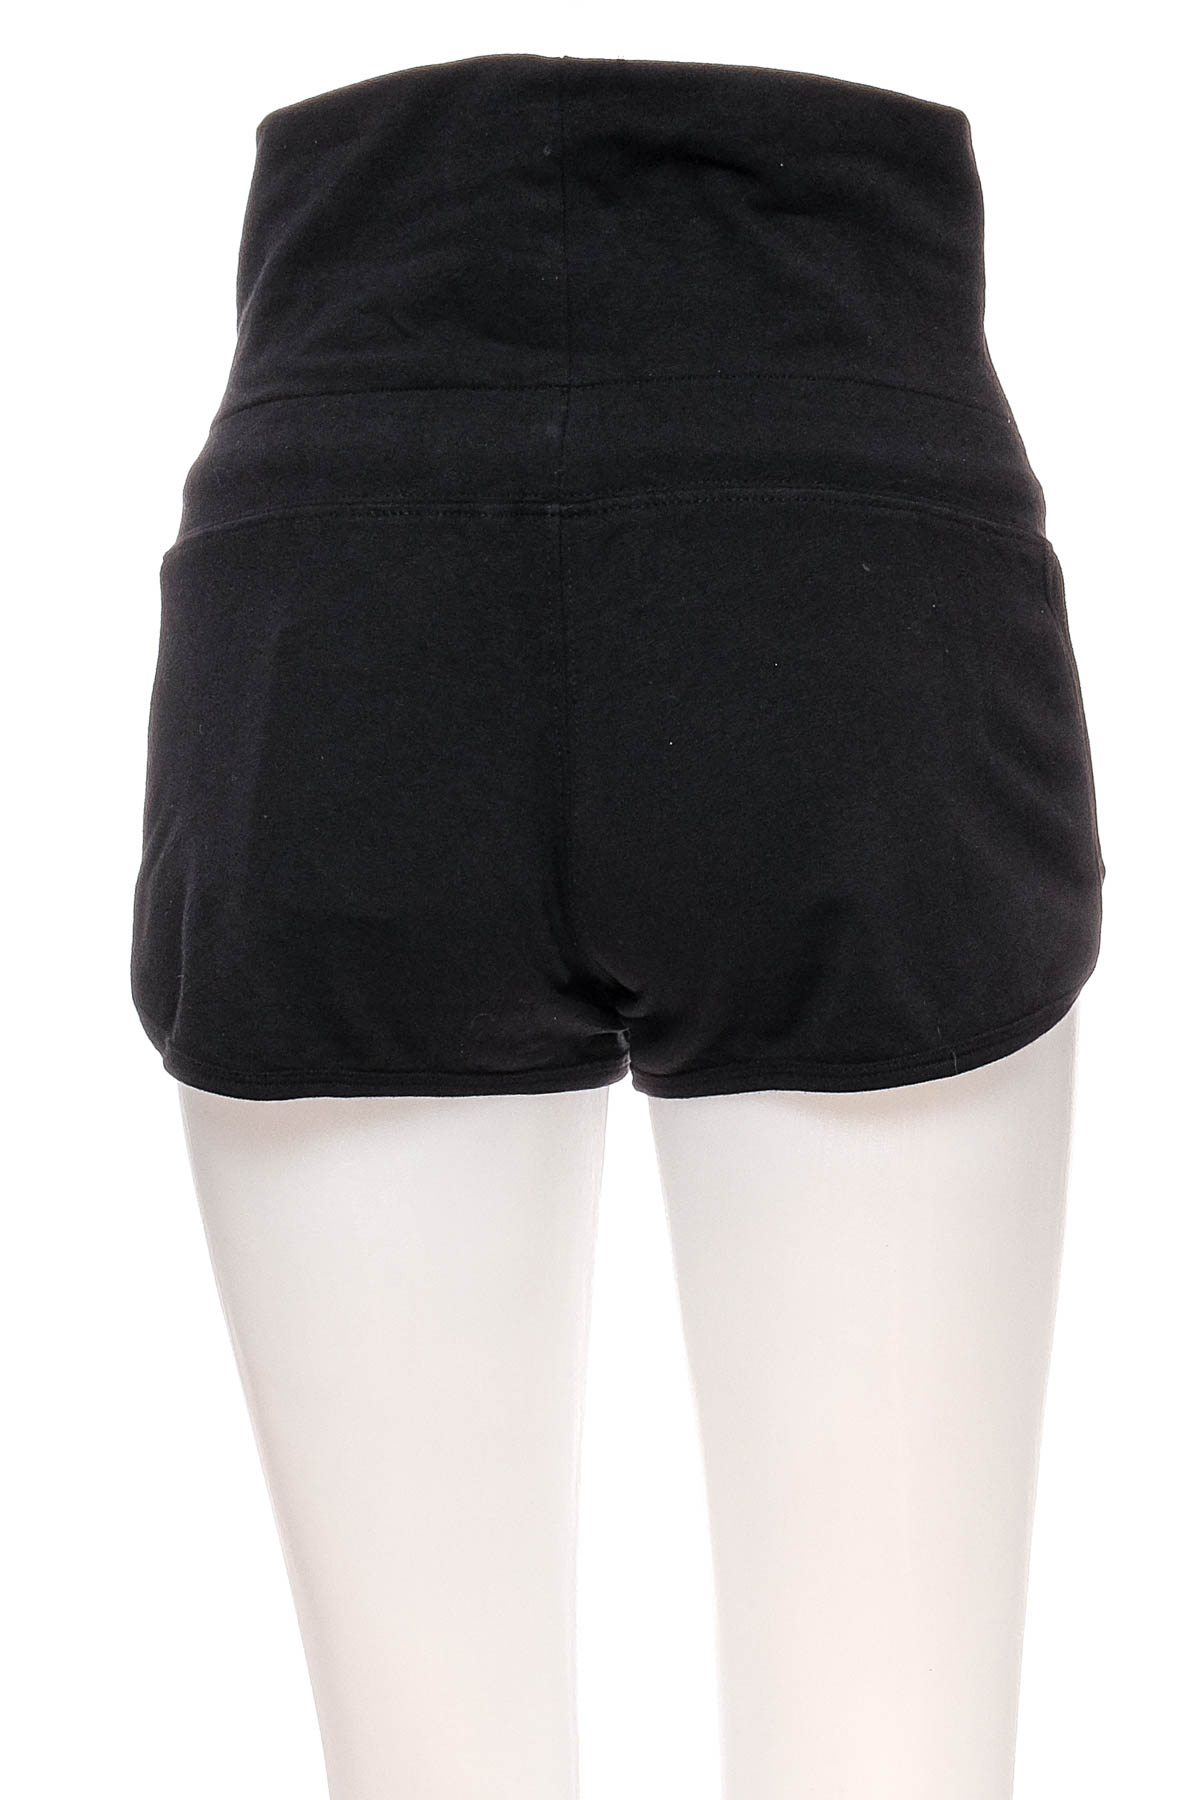 Female shorts - H&M Sport - 1